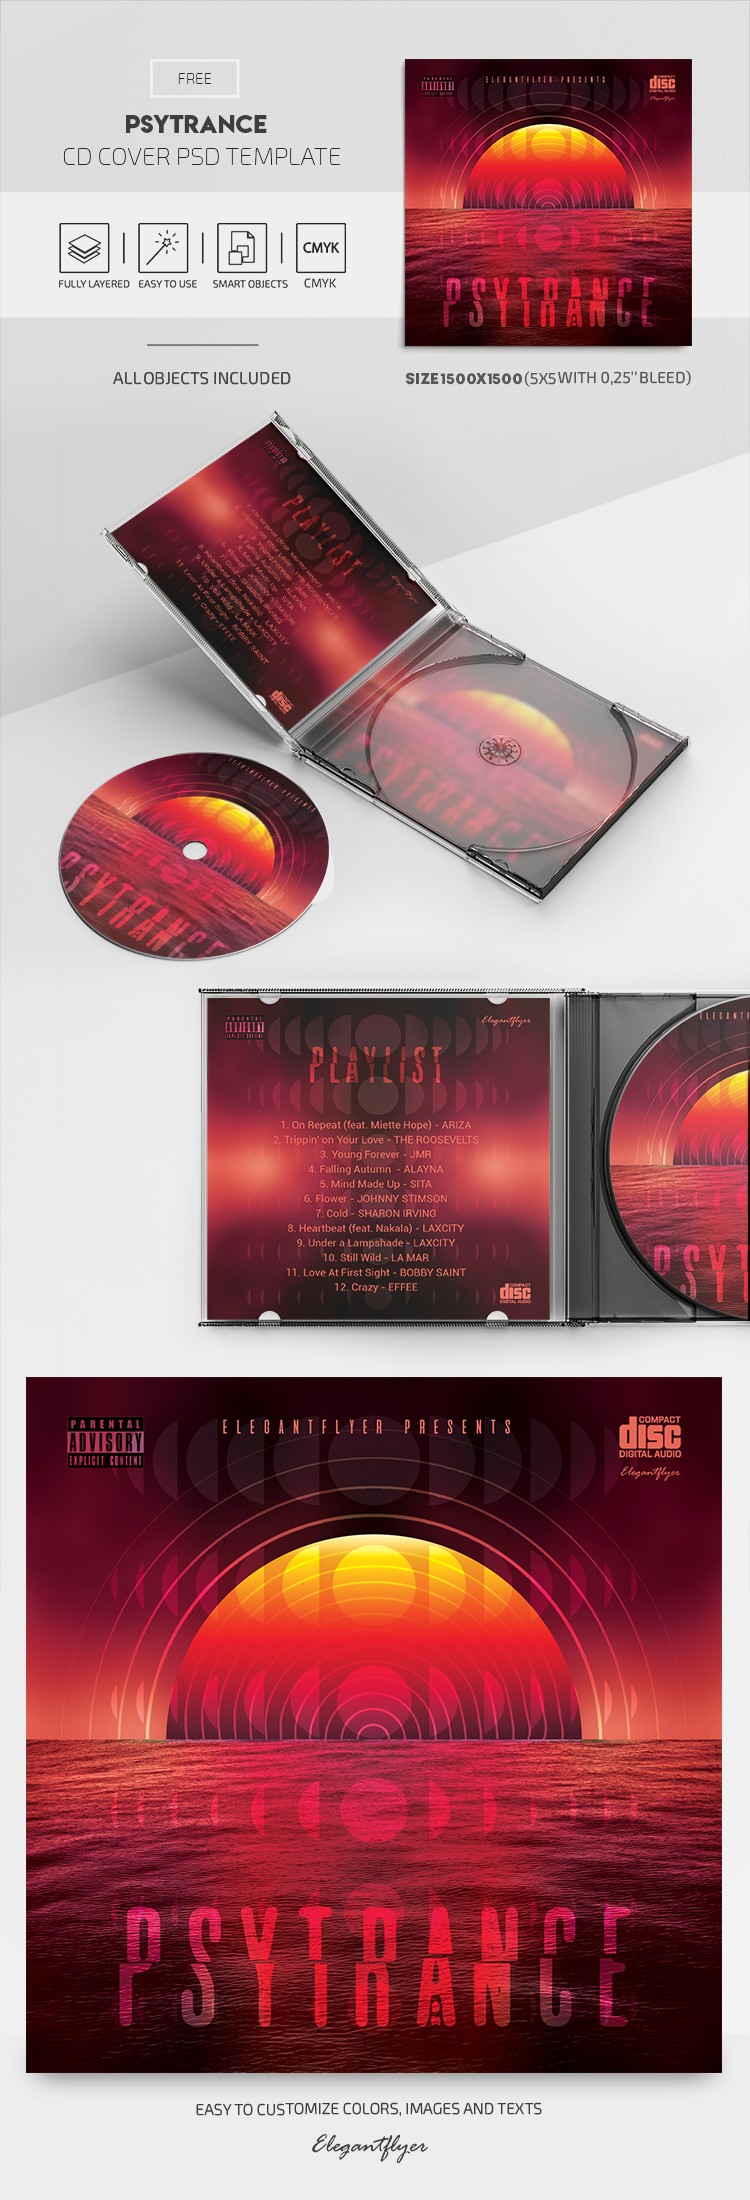 Psytrance-CD-Cover by ElegantFlyer